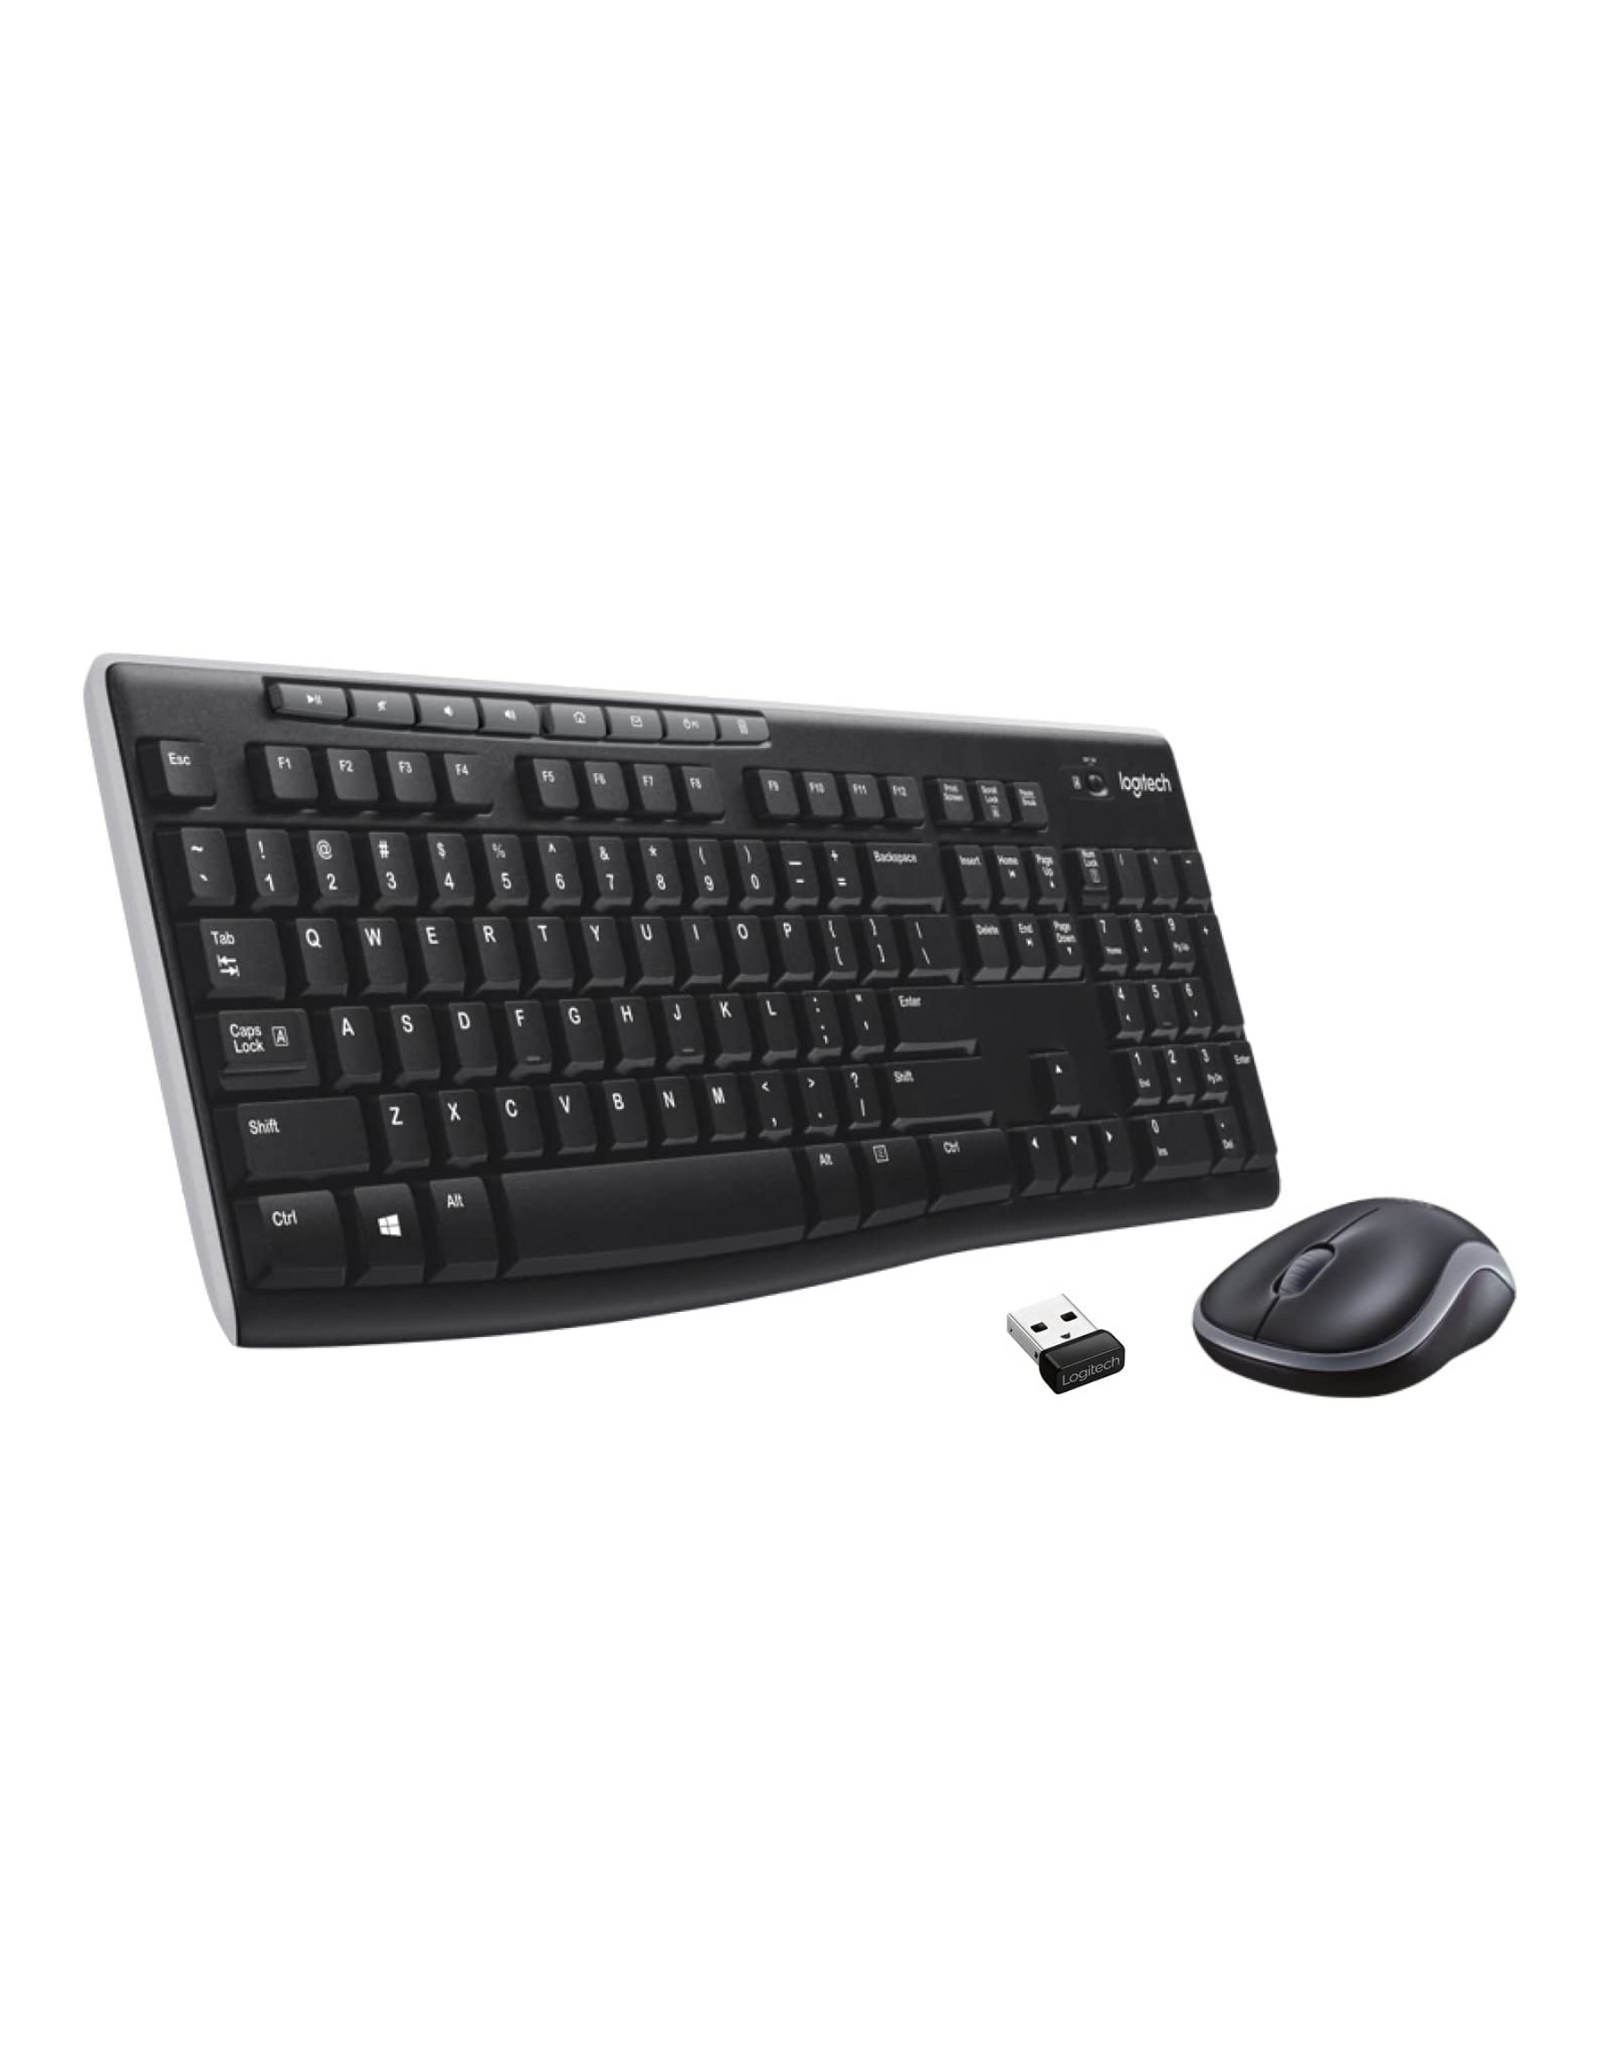 Logitech MK270 Wireless Keyboard And Mouse Combo, 2.4 GHz Wireless, Black